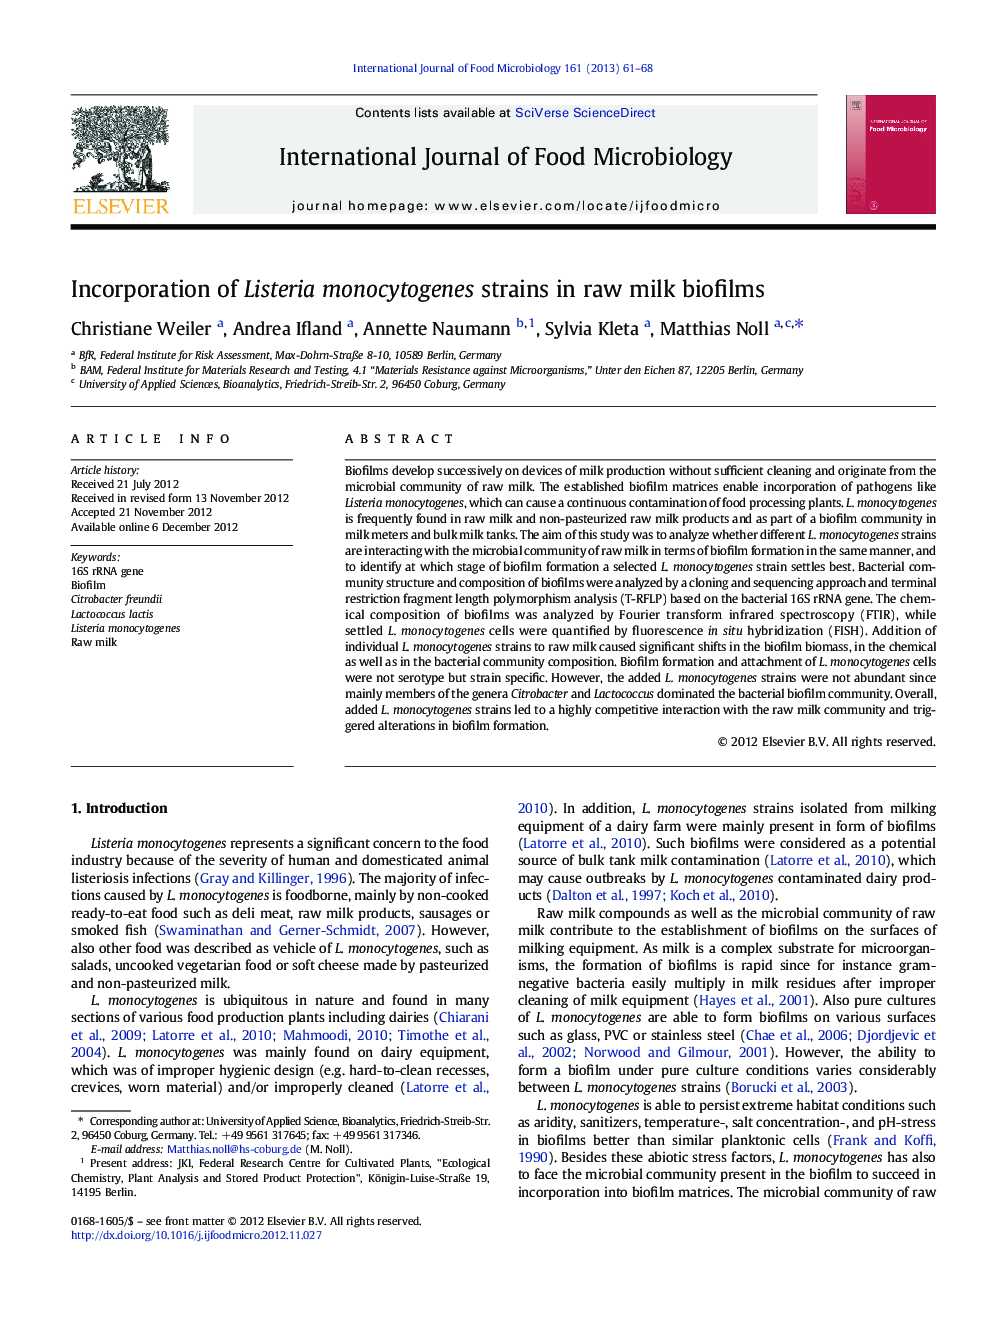 Incorporation of Listeria monocytogenes strains in raw milk biofilms